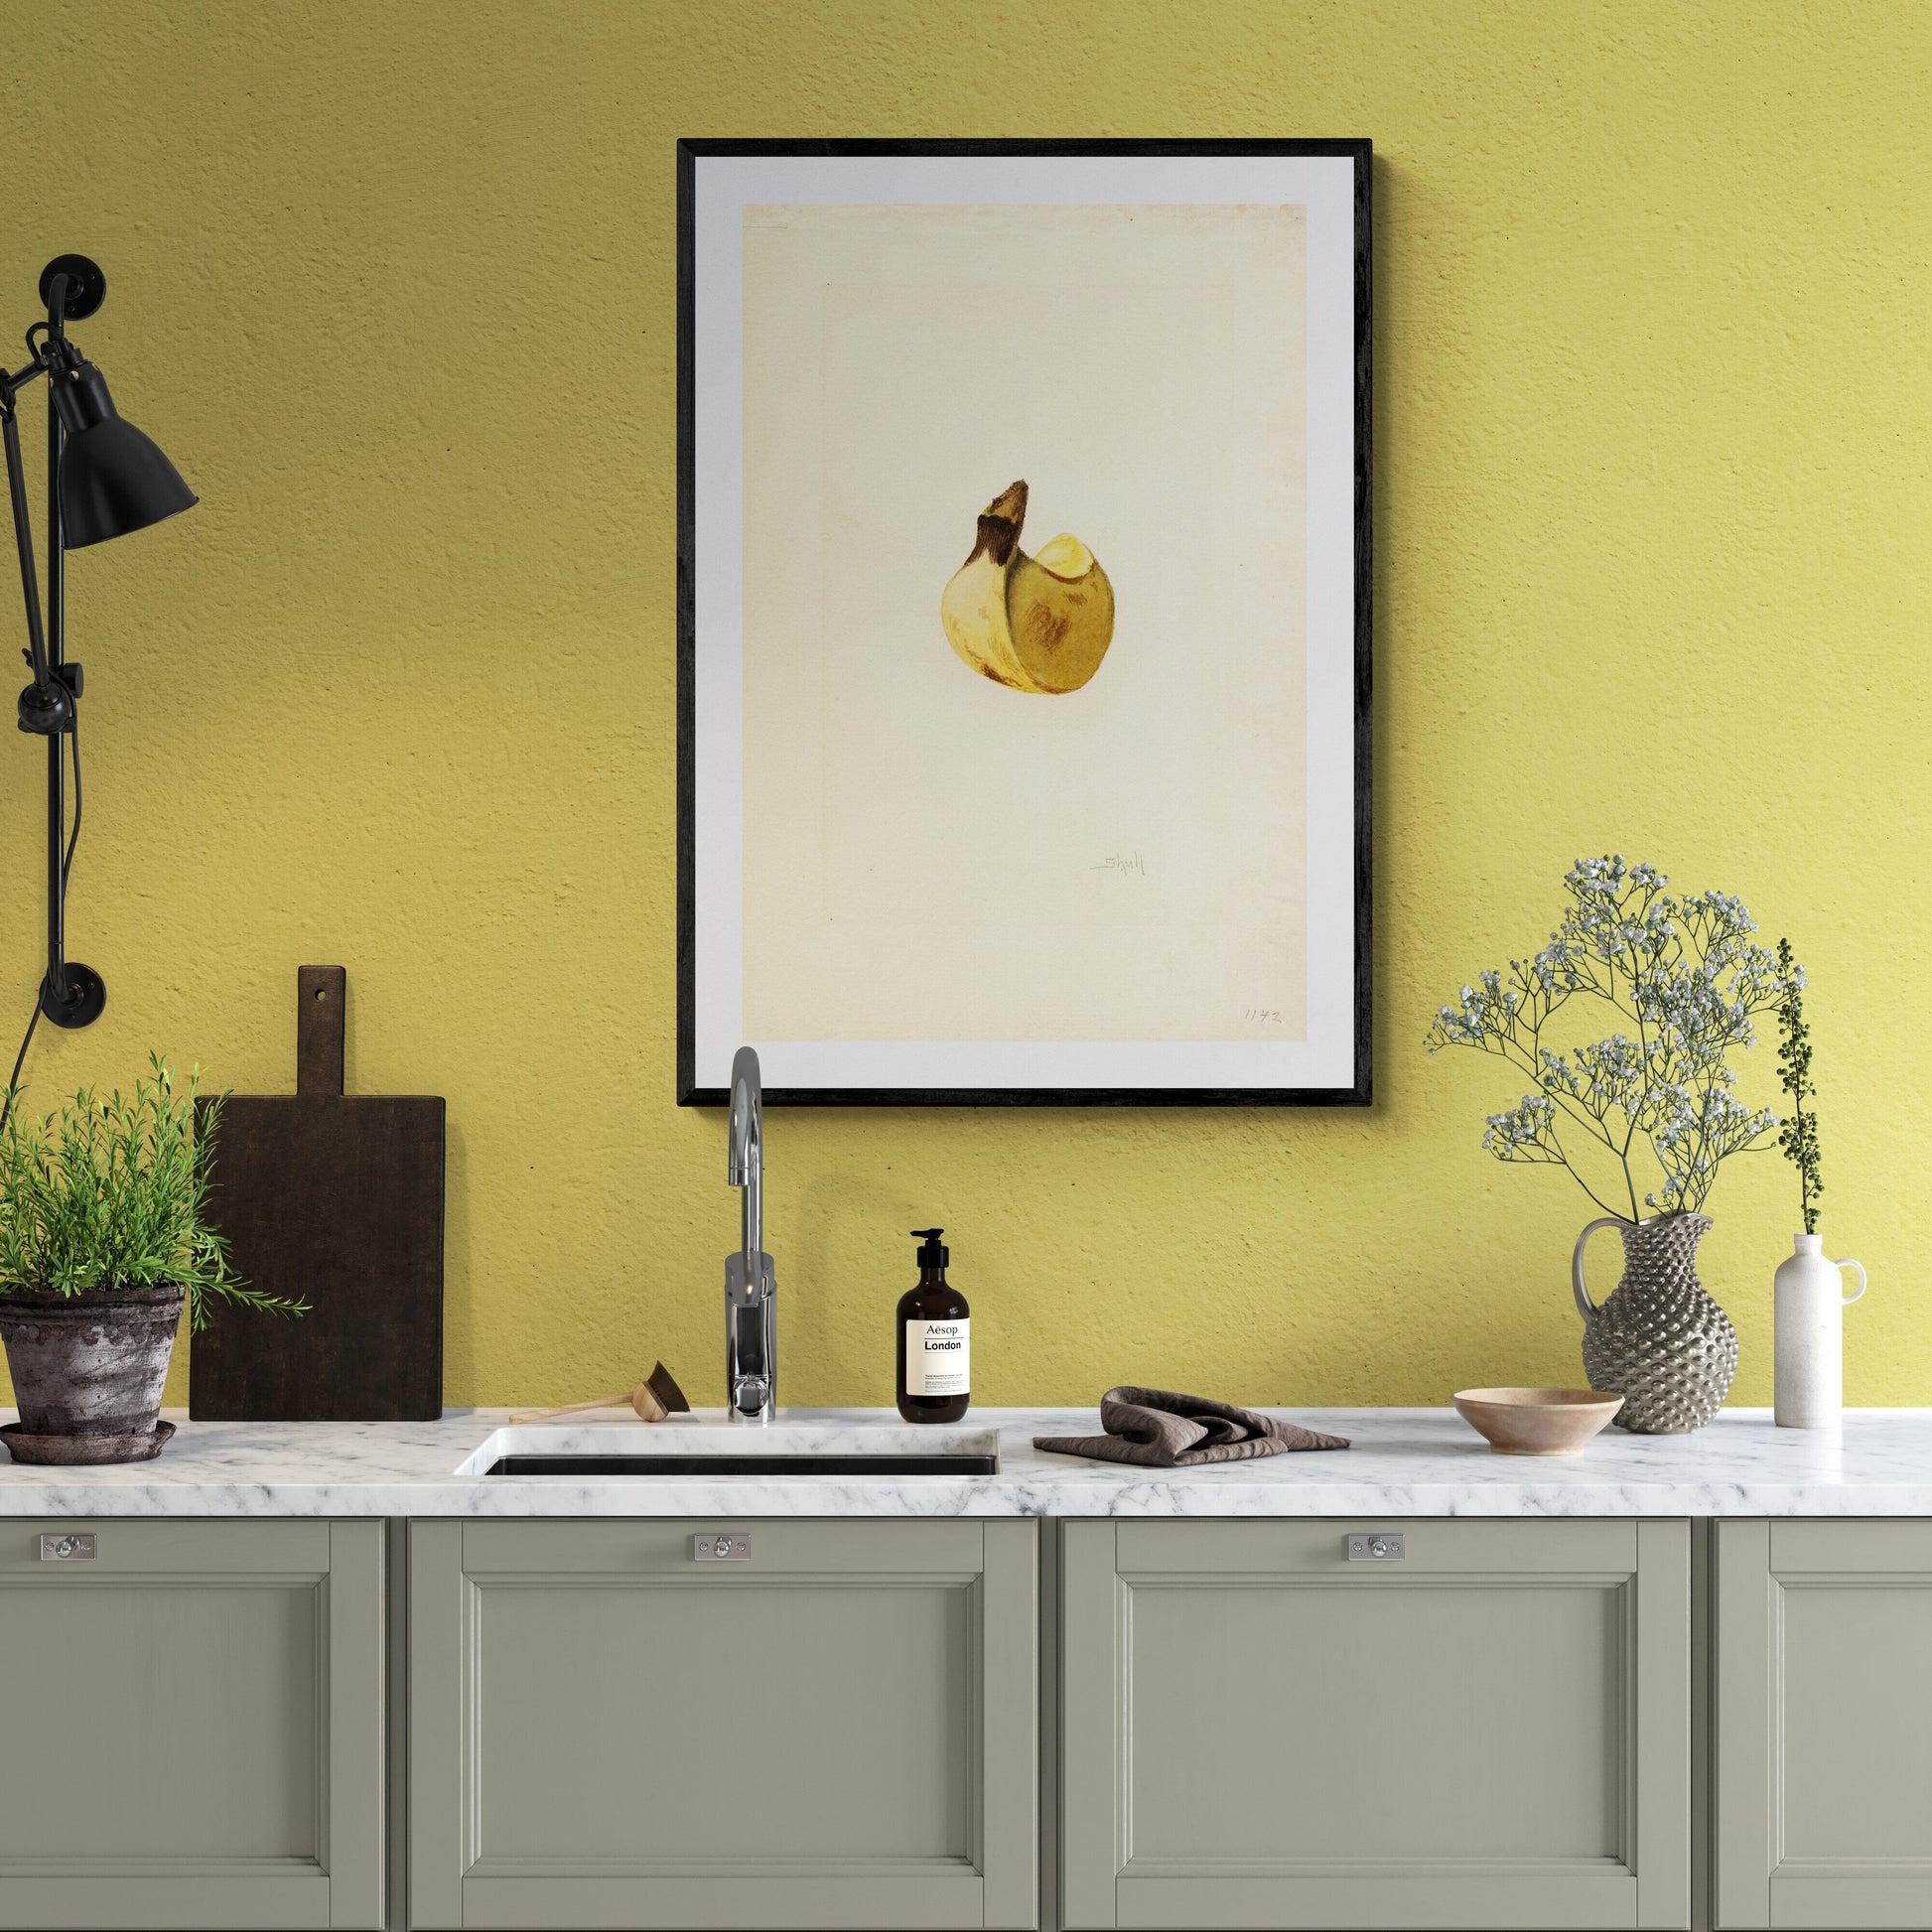 "Banana" botanical art kitchen print (c1900) | James Marion Shull Posters, Prints, & Visual Artwork The Trumpet Shop   